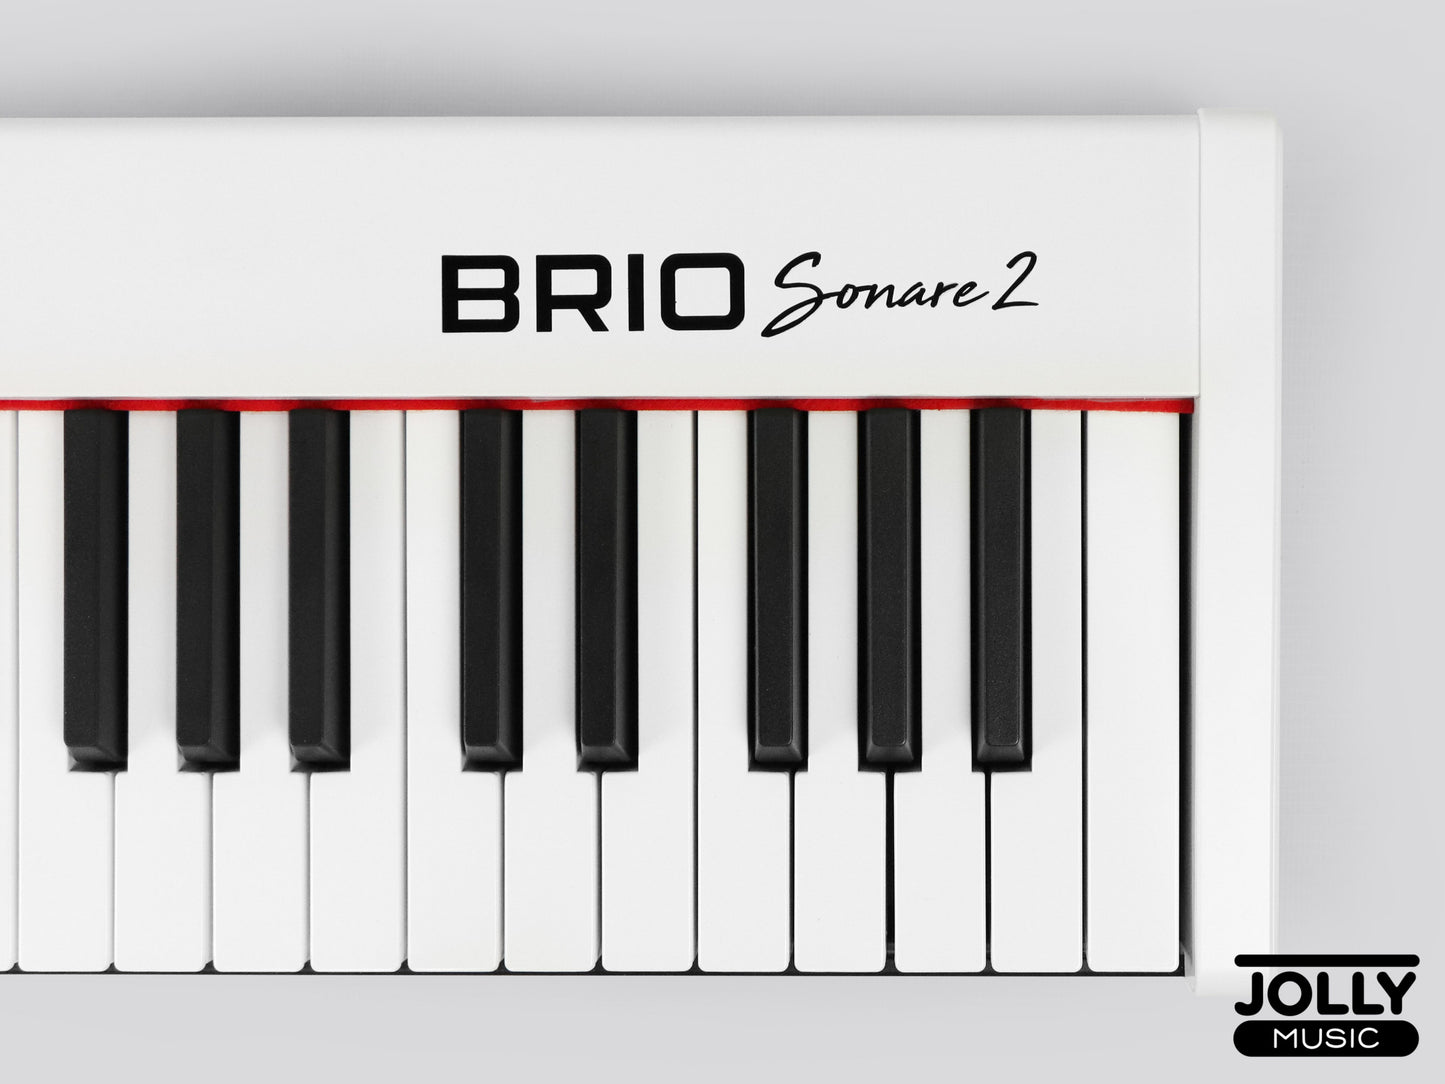 Brio BX2-61 Sonare 2 61-Key Electronic Keyboard